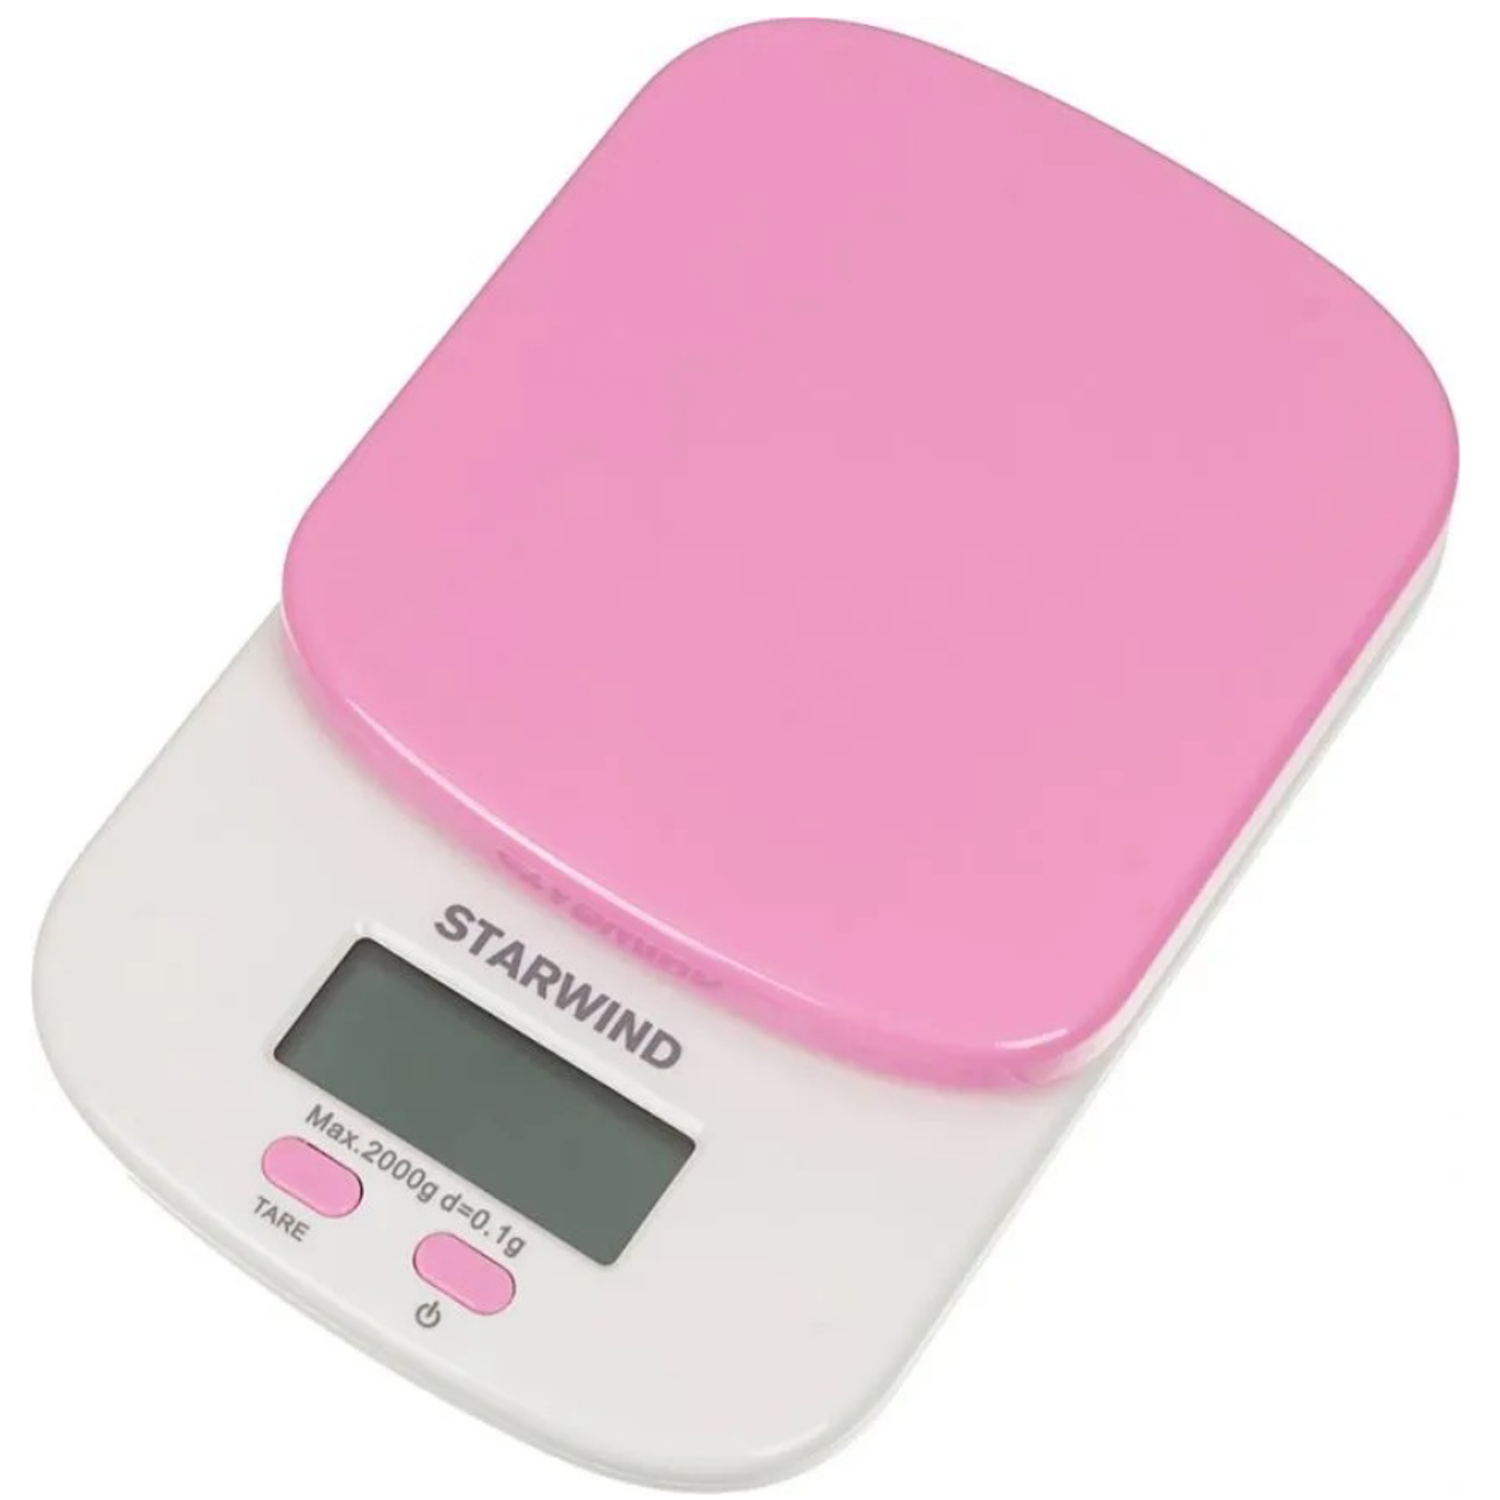 Весы StarWind кухонные электронные до 2 кг цвет розовый - фото 1